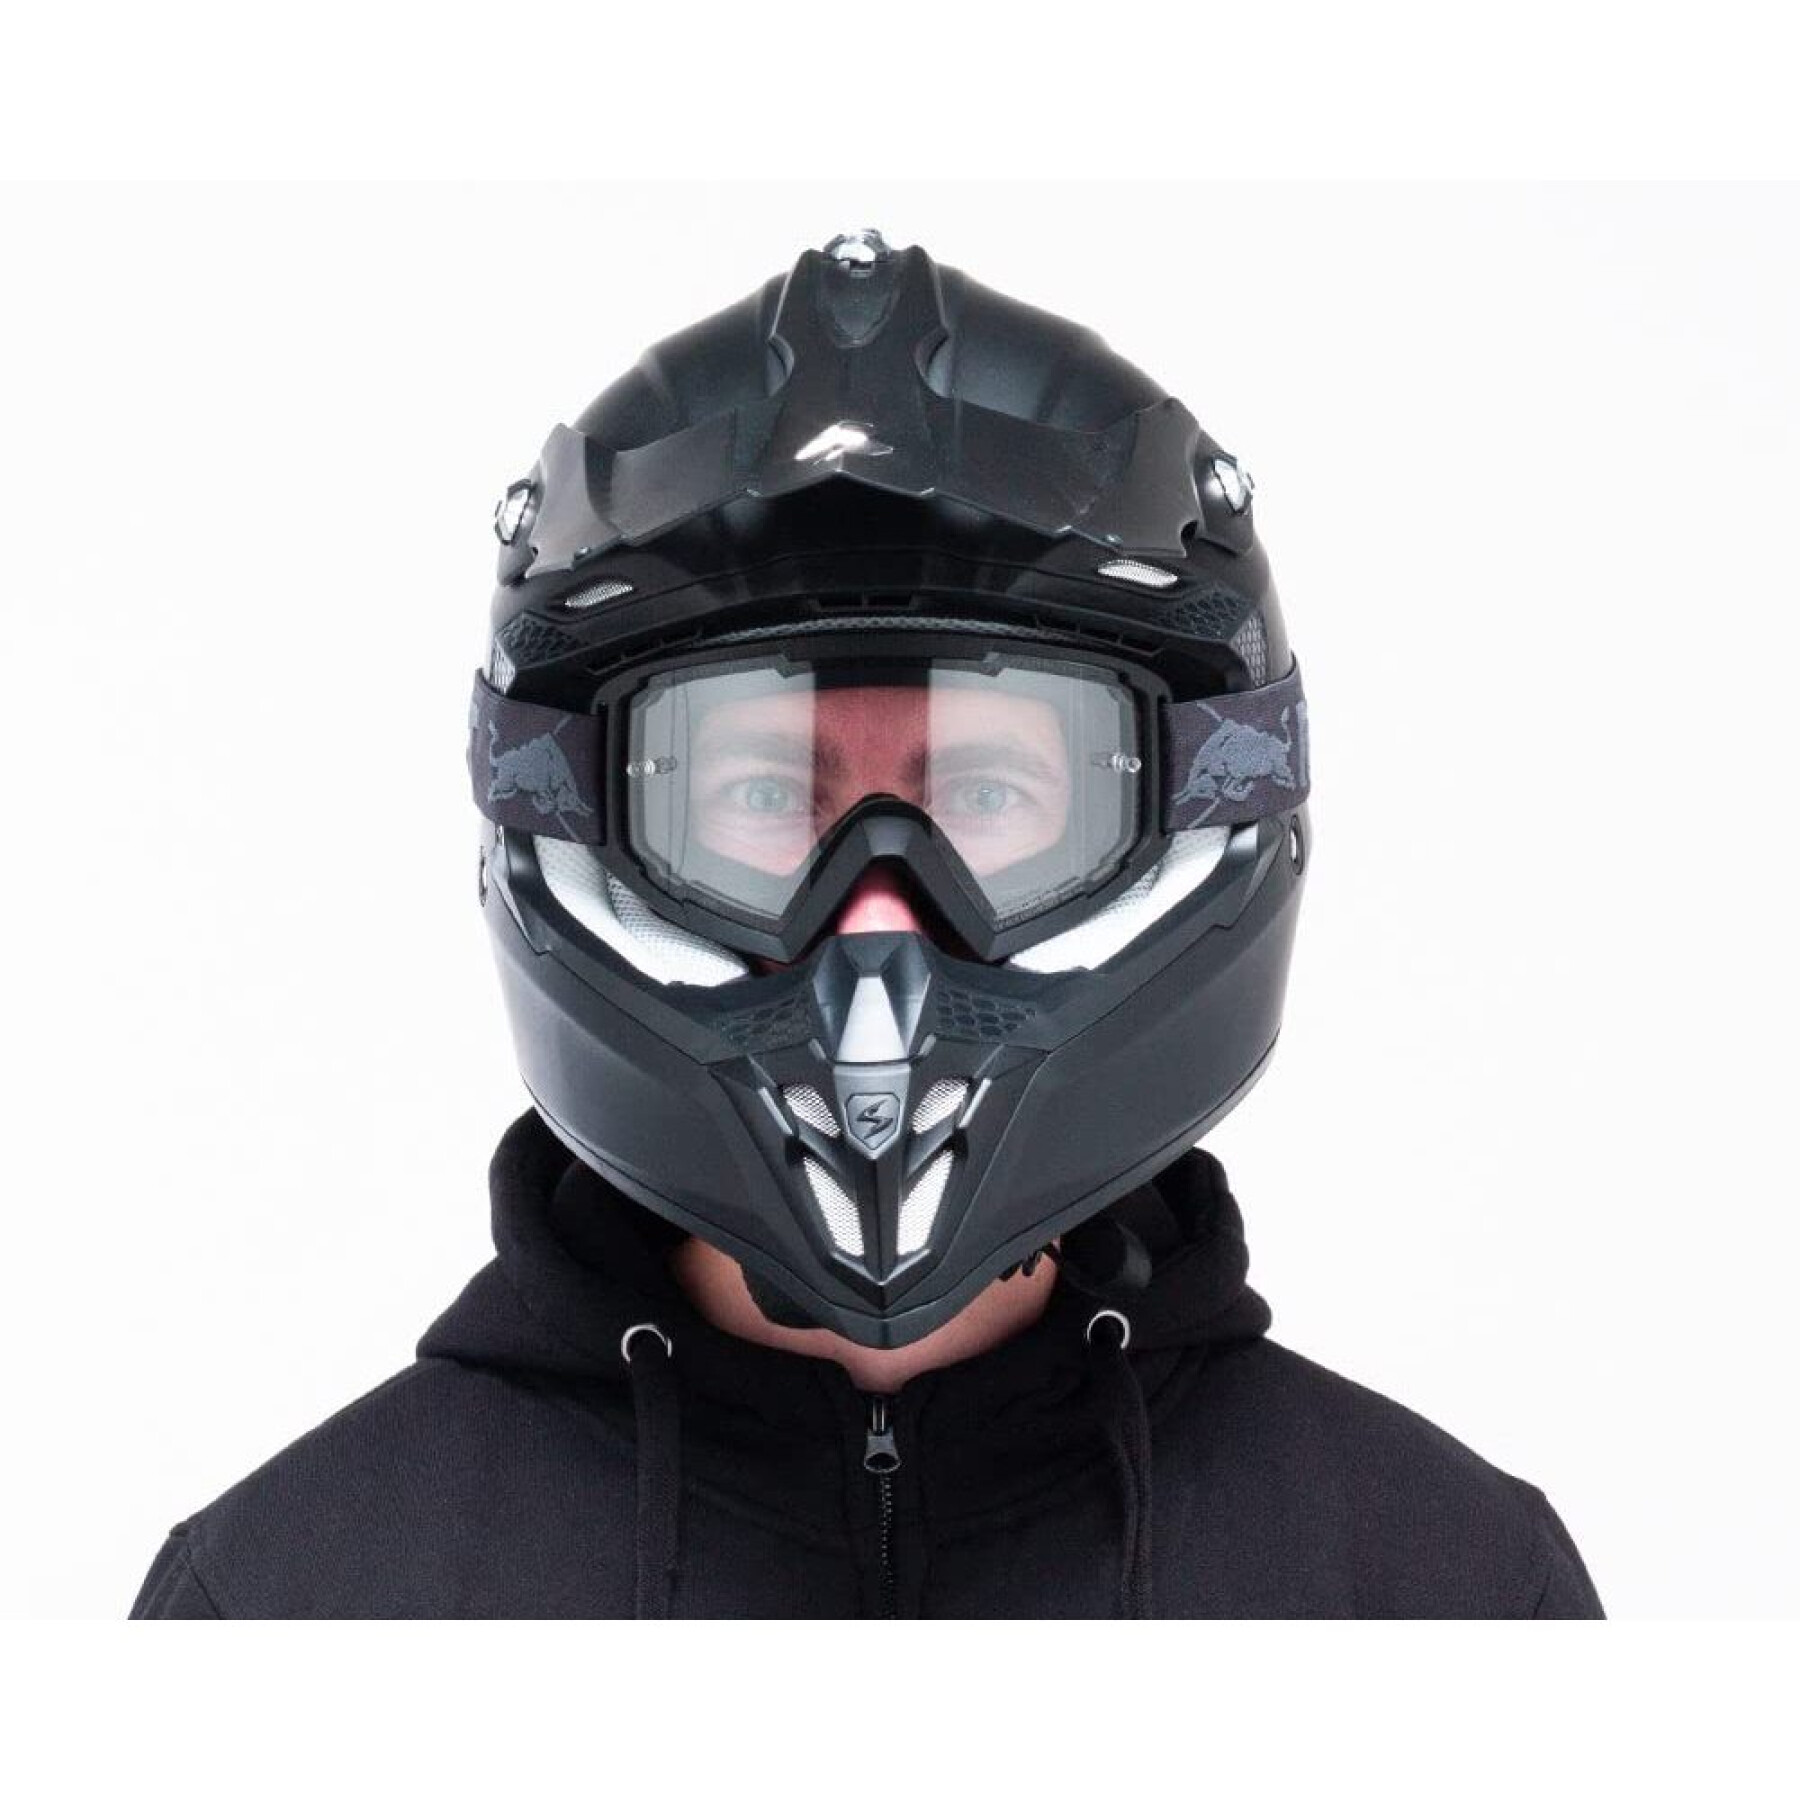 Cross motorcycle mask Redbull Spect Eyewear Whip-002